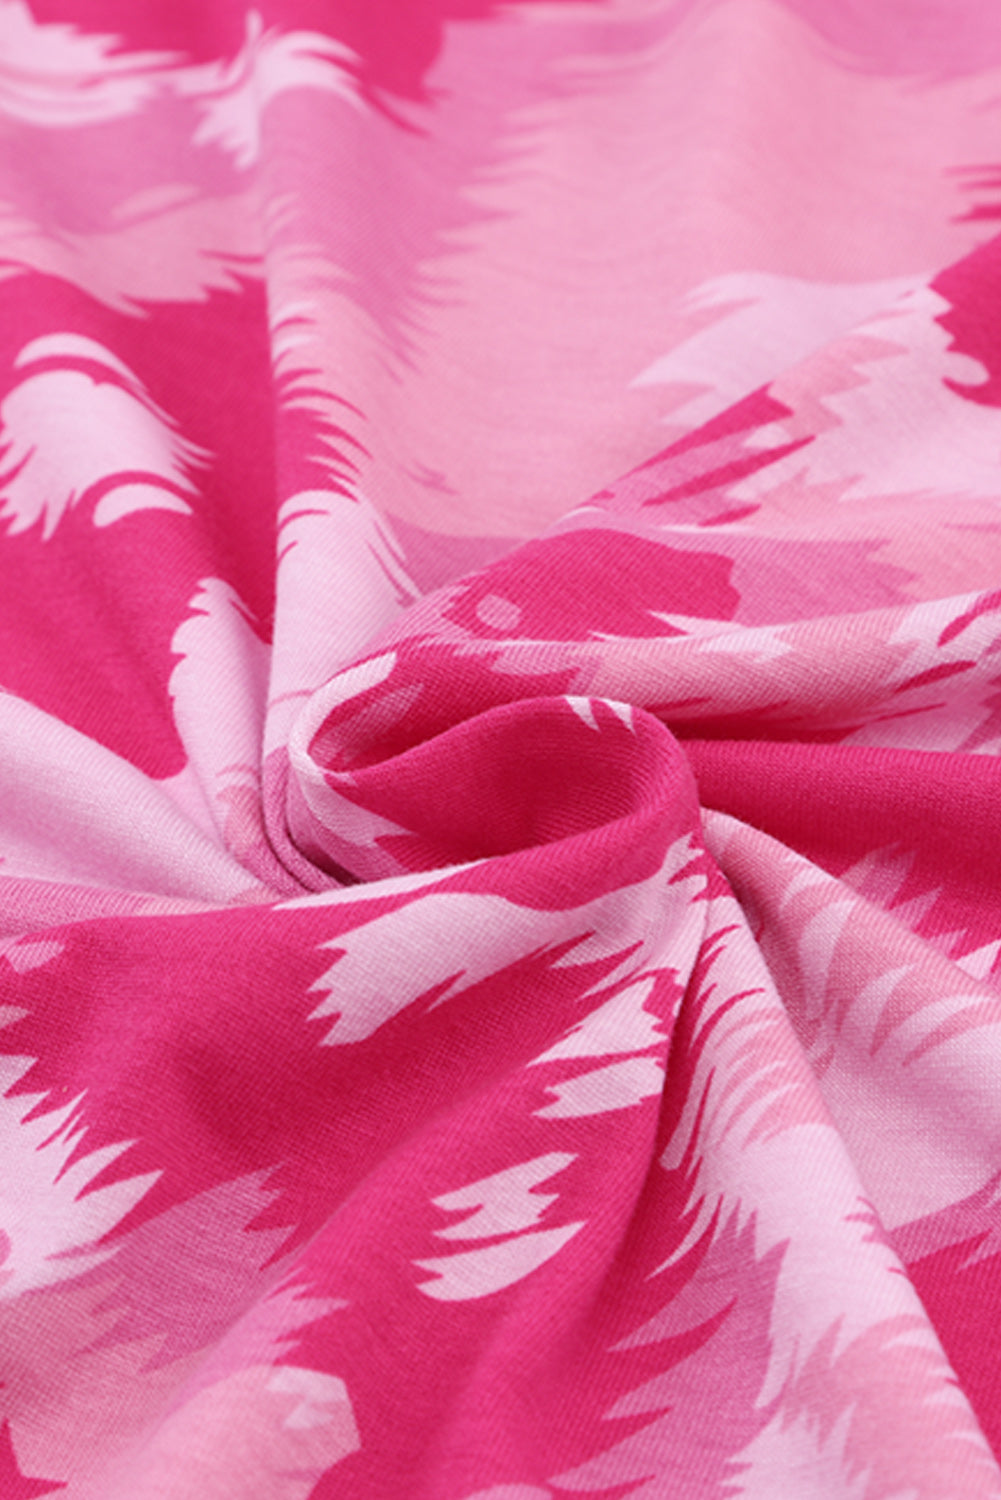 Pink Leopard Print Half Sleeve Oversized T Shirt